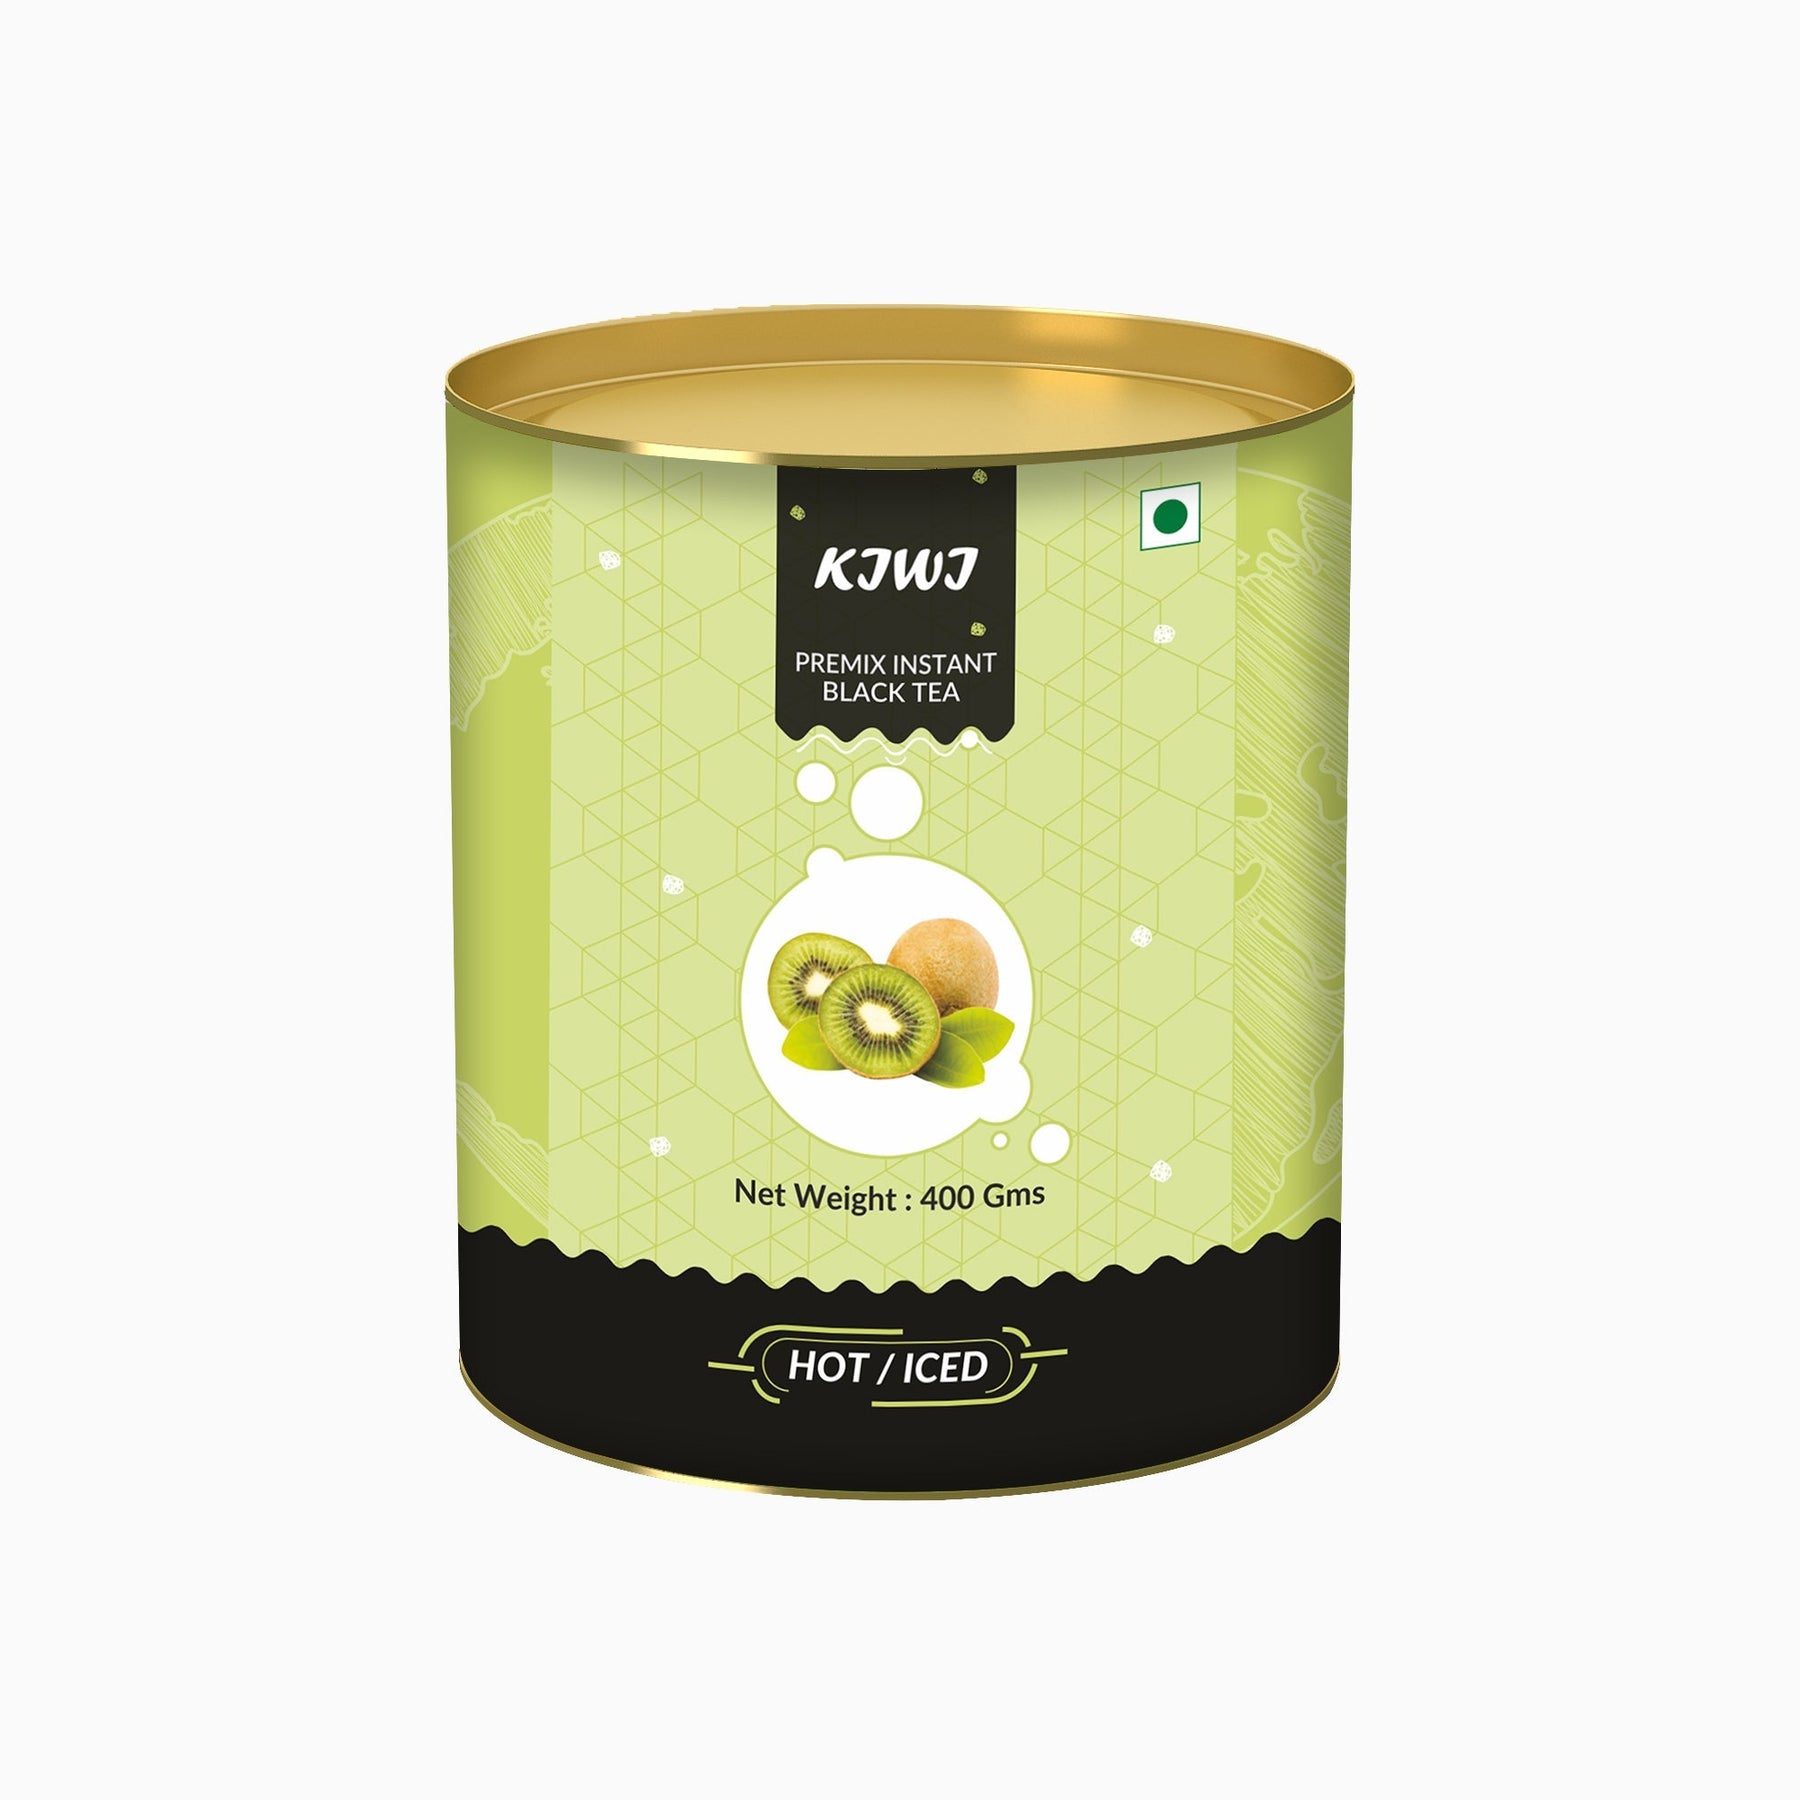 Kiwi Flavored Instant Black Tea - 800 gms